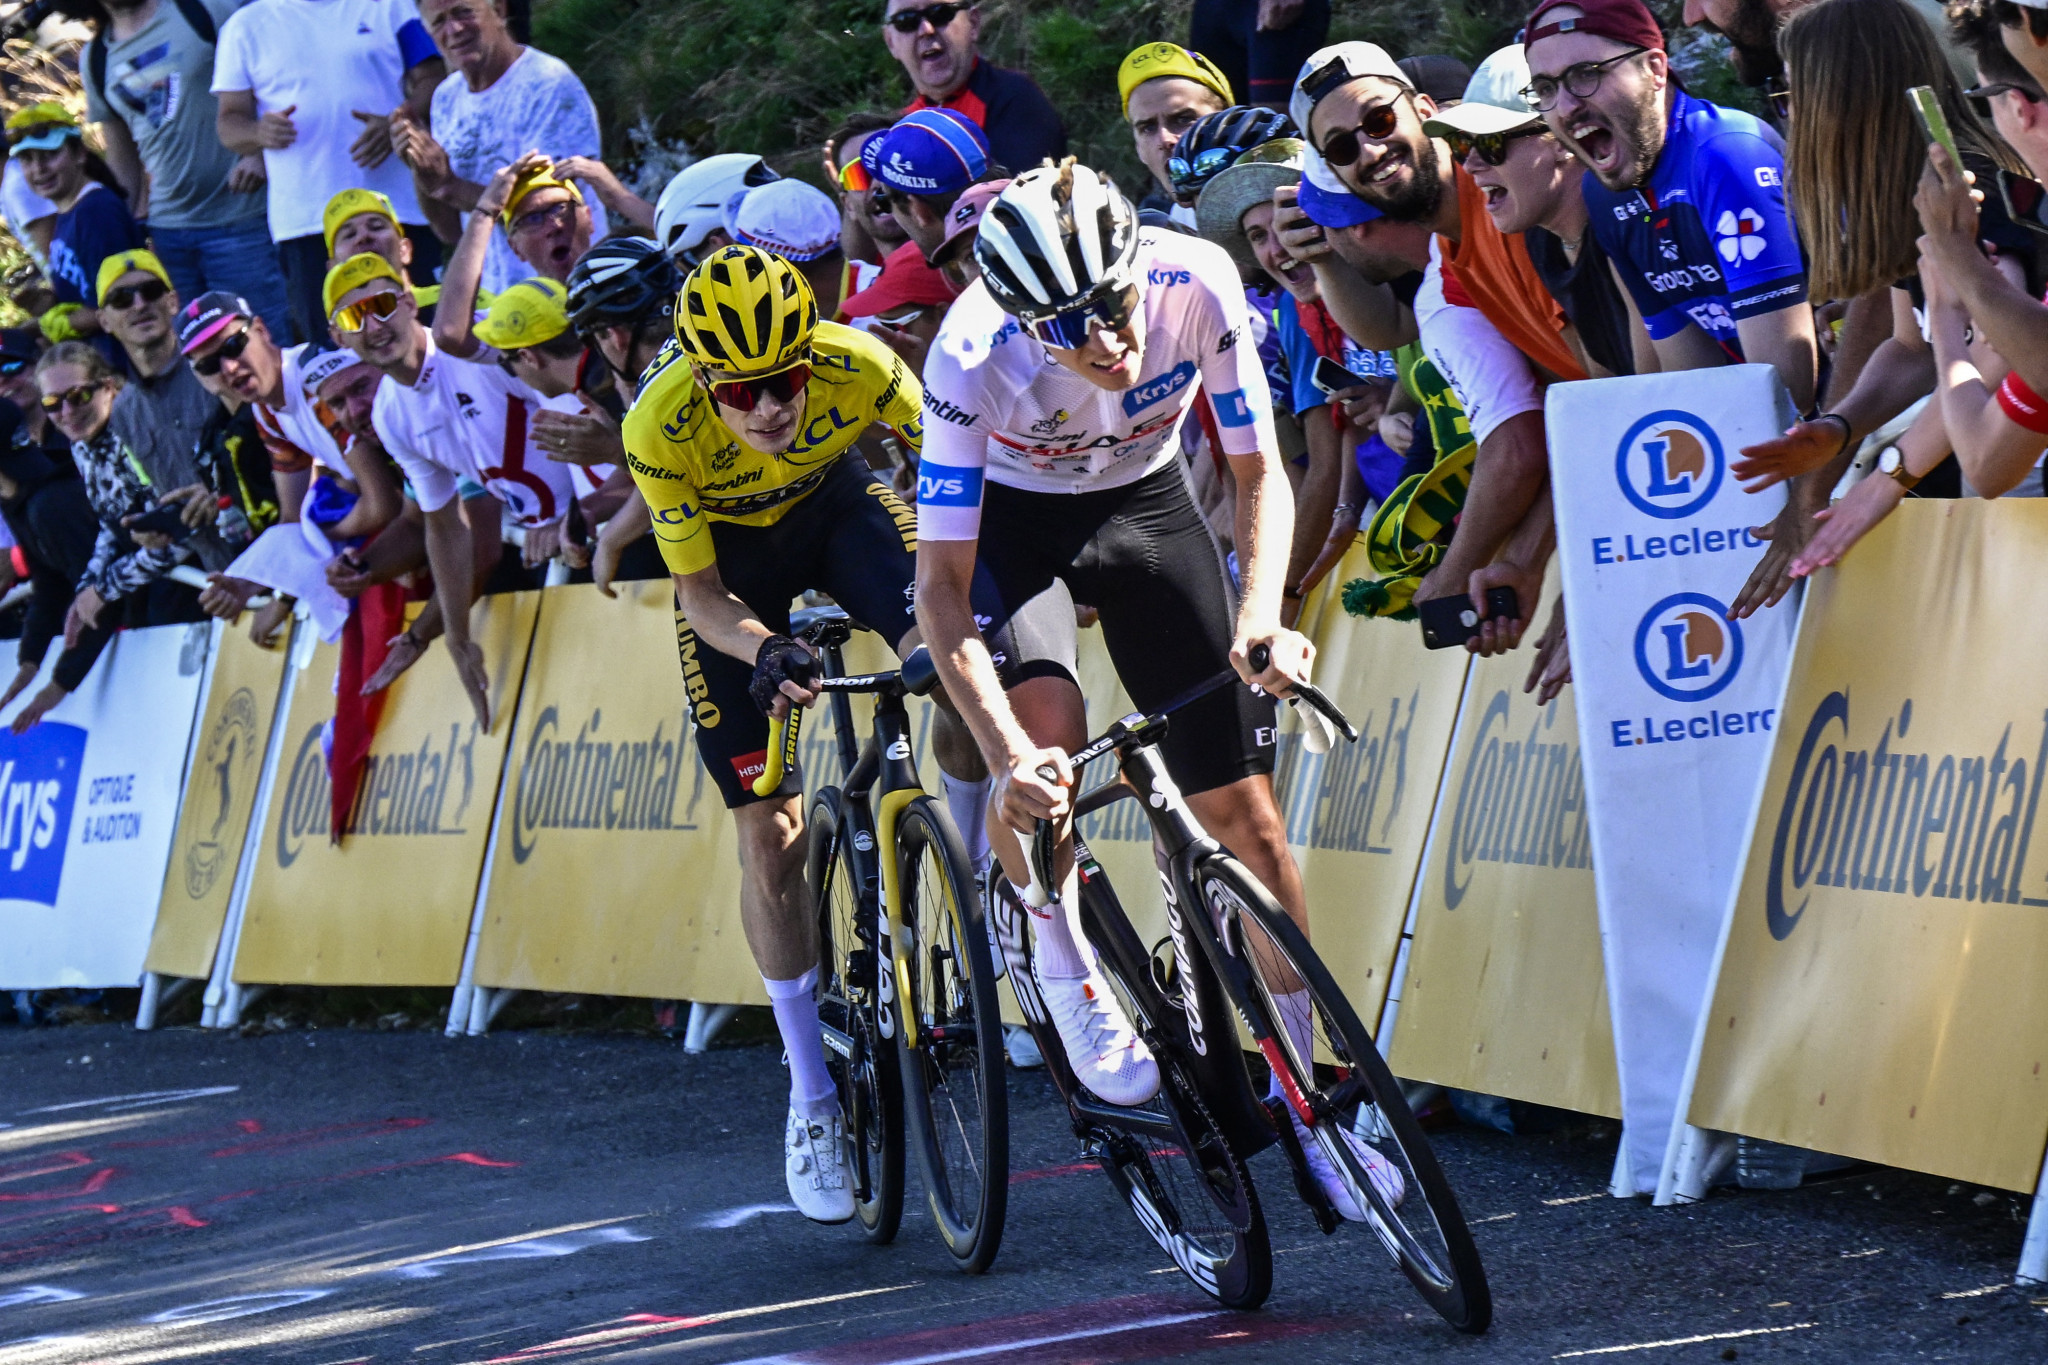 Pogačar cuts gap on leader Vingegaard with late surge on stage 13 of Tour de France